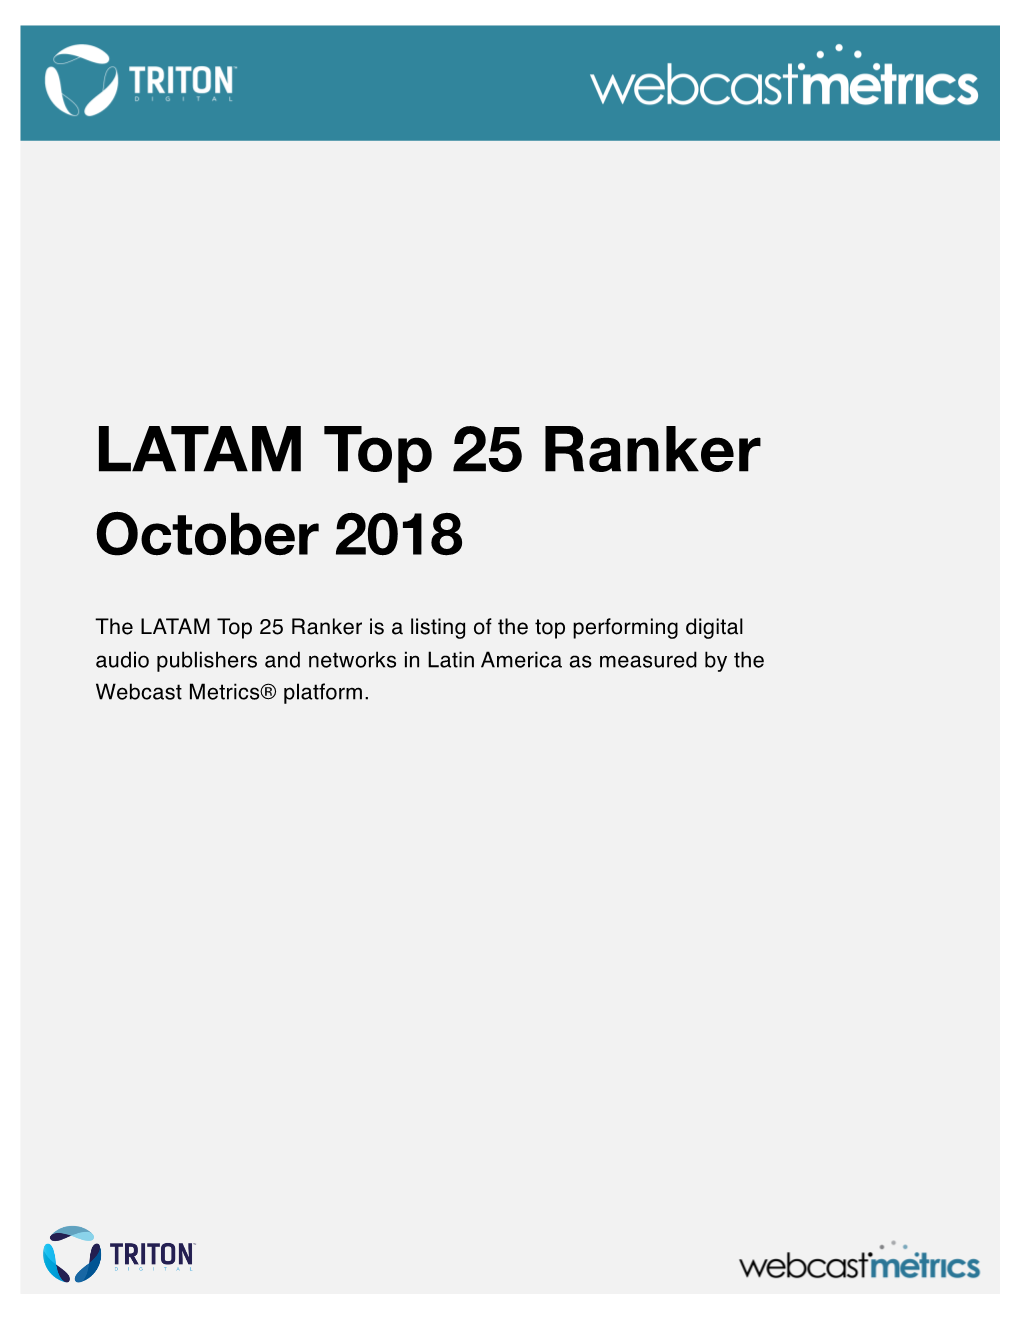 LATAM Top 25 Ranker October 2018